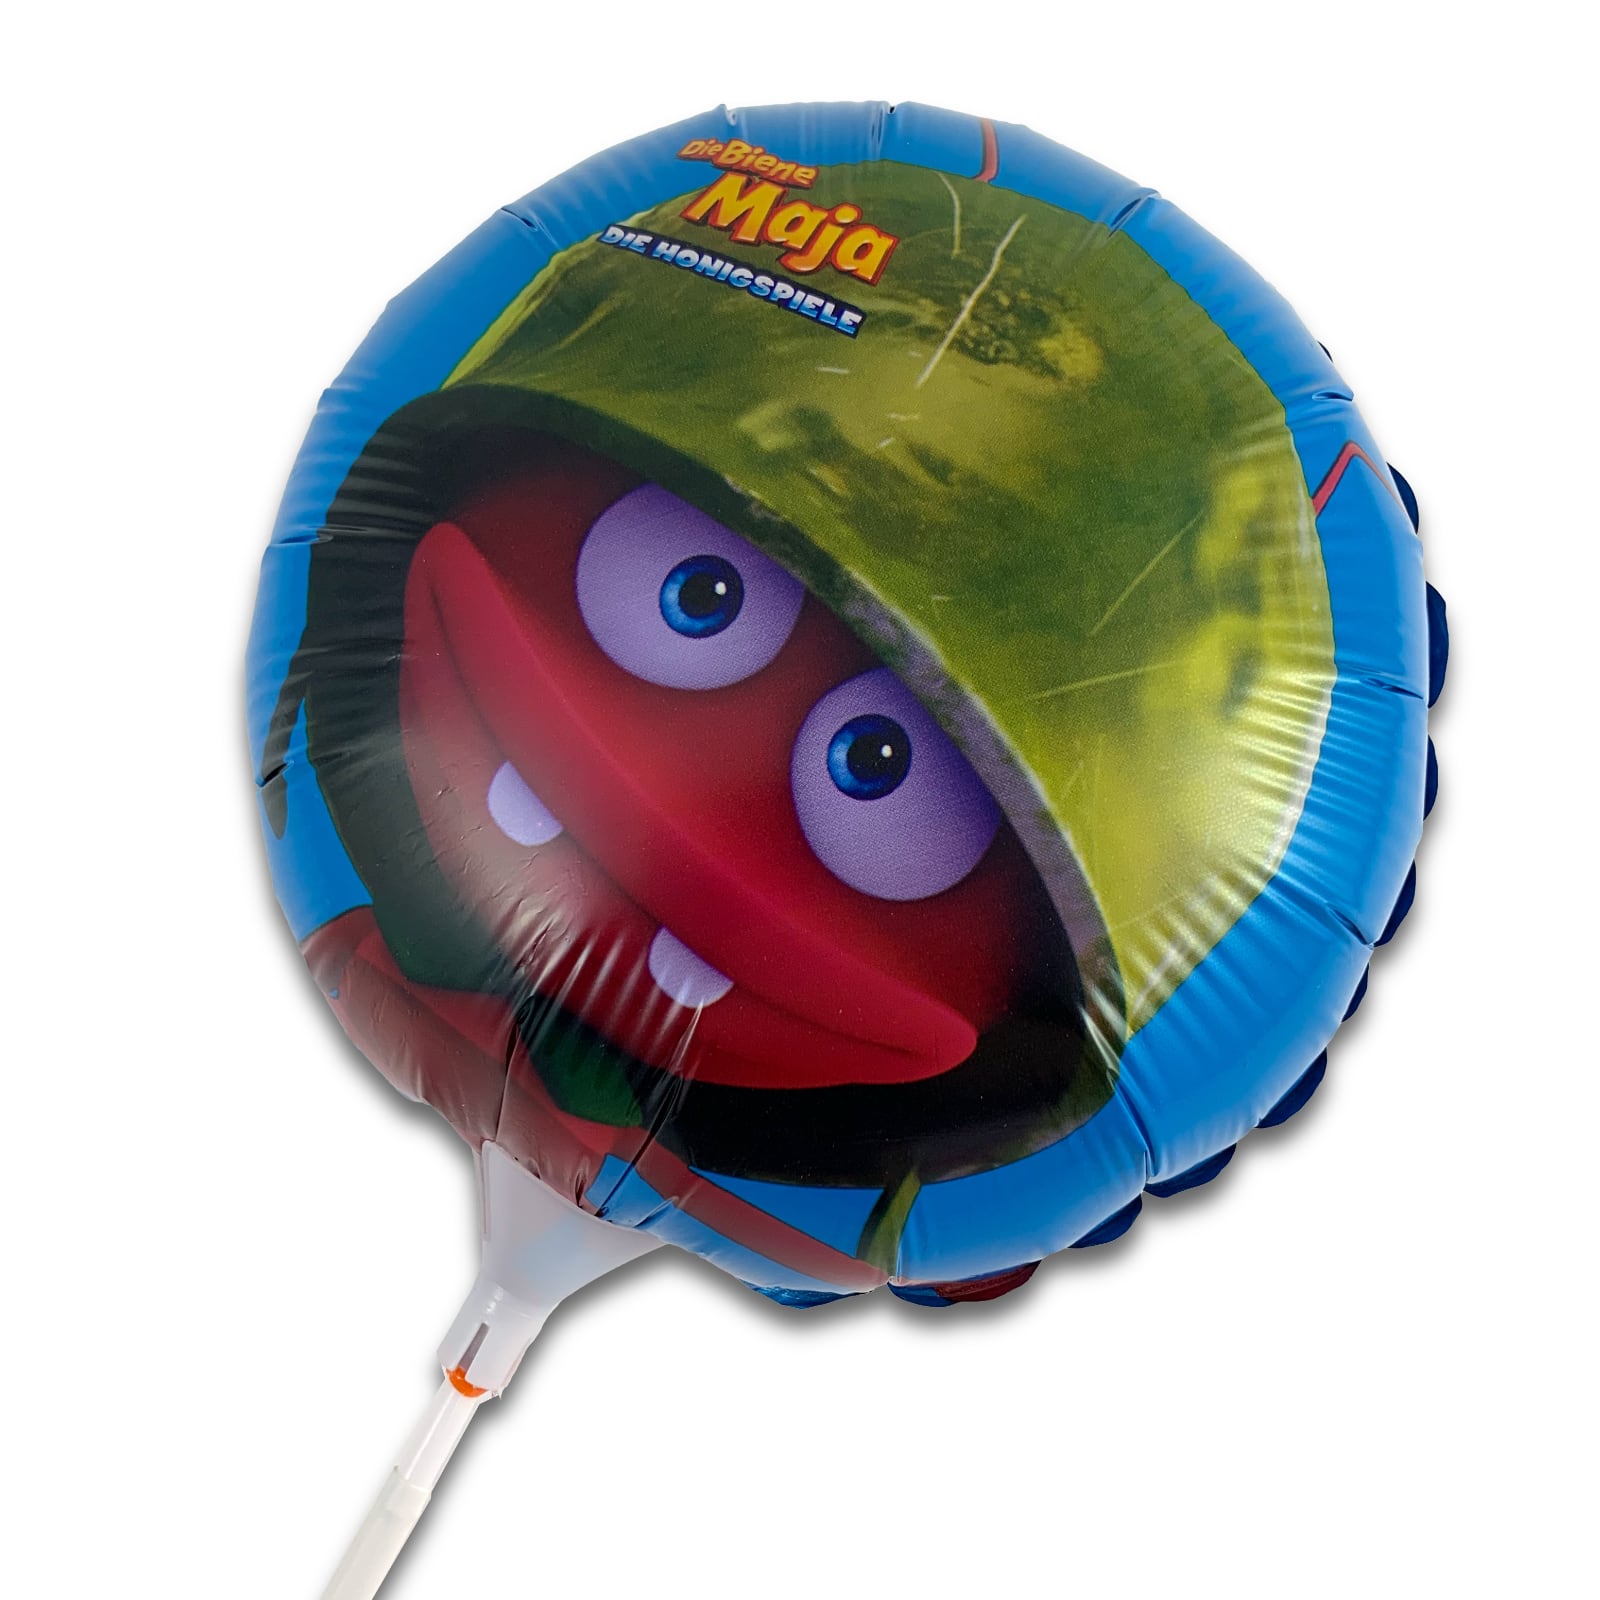 Folienballon Die Biene Maja Honigspiele Ameise Geburtstag Party Luftballon